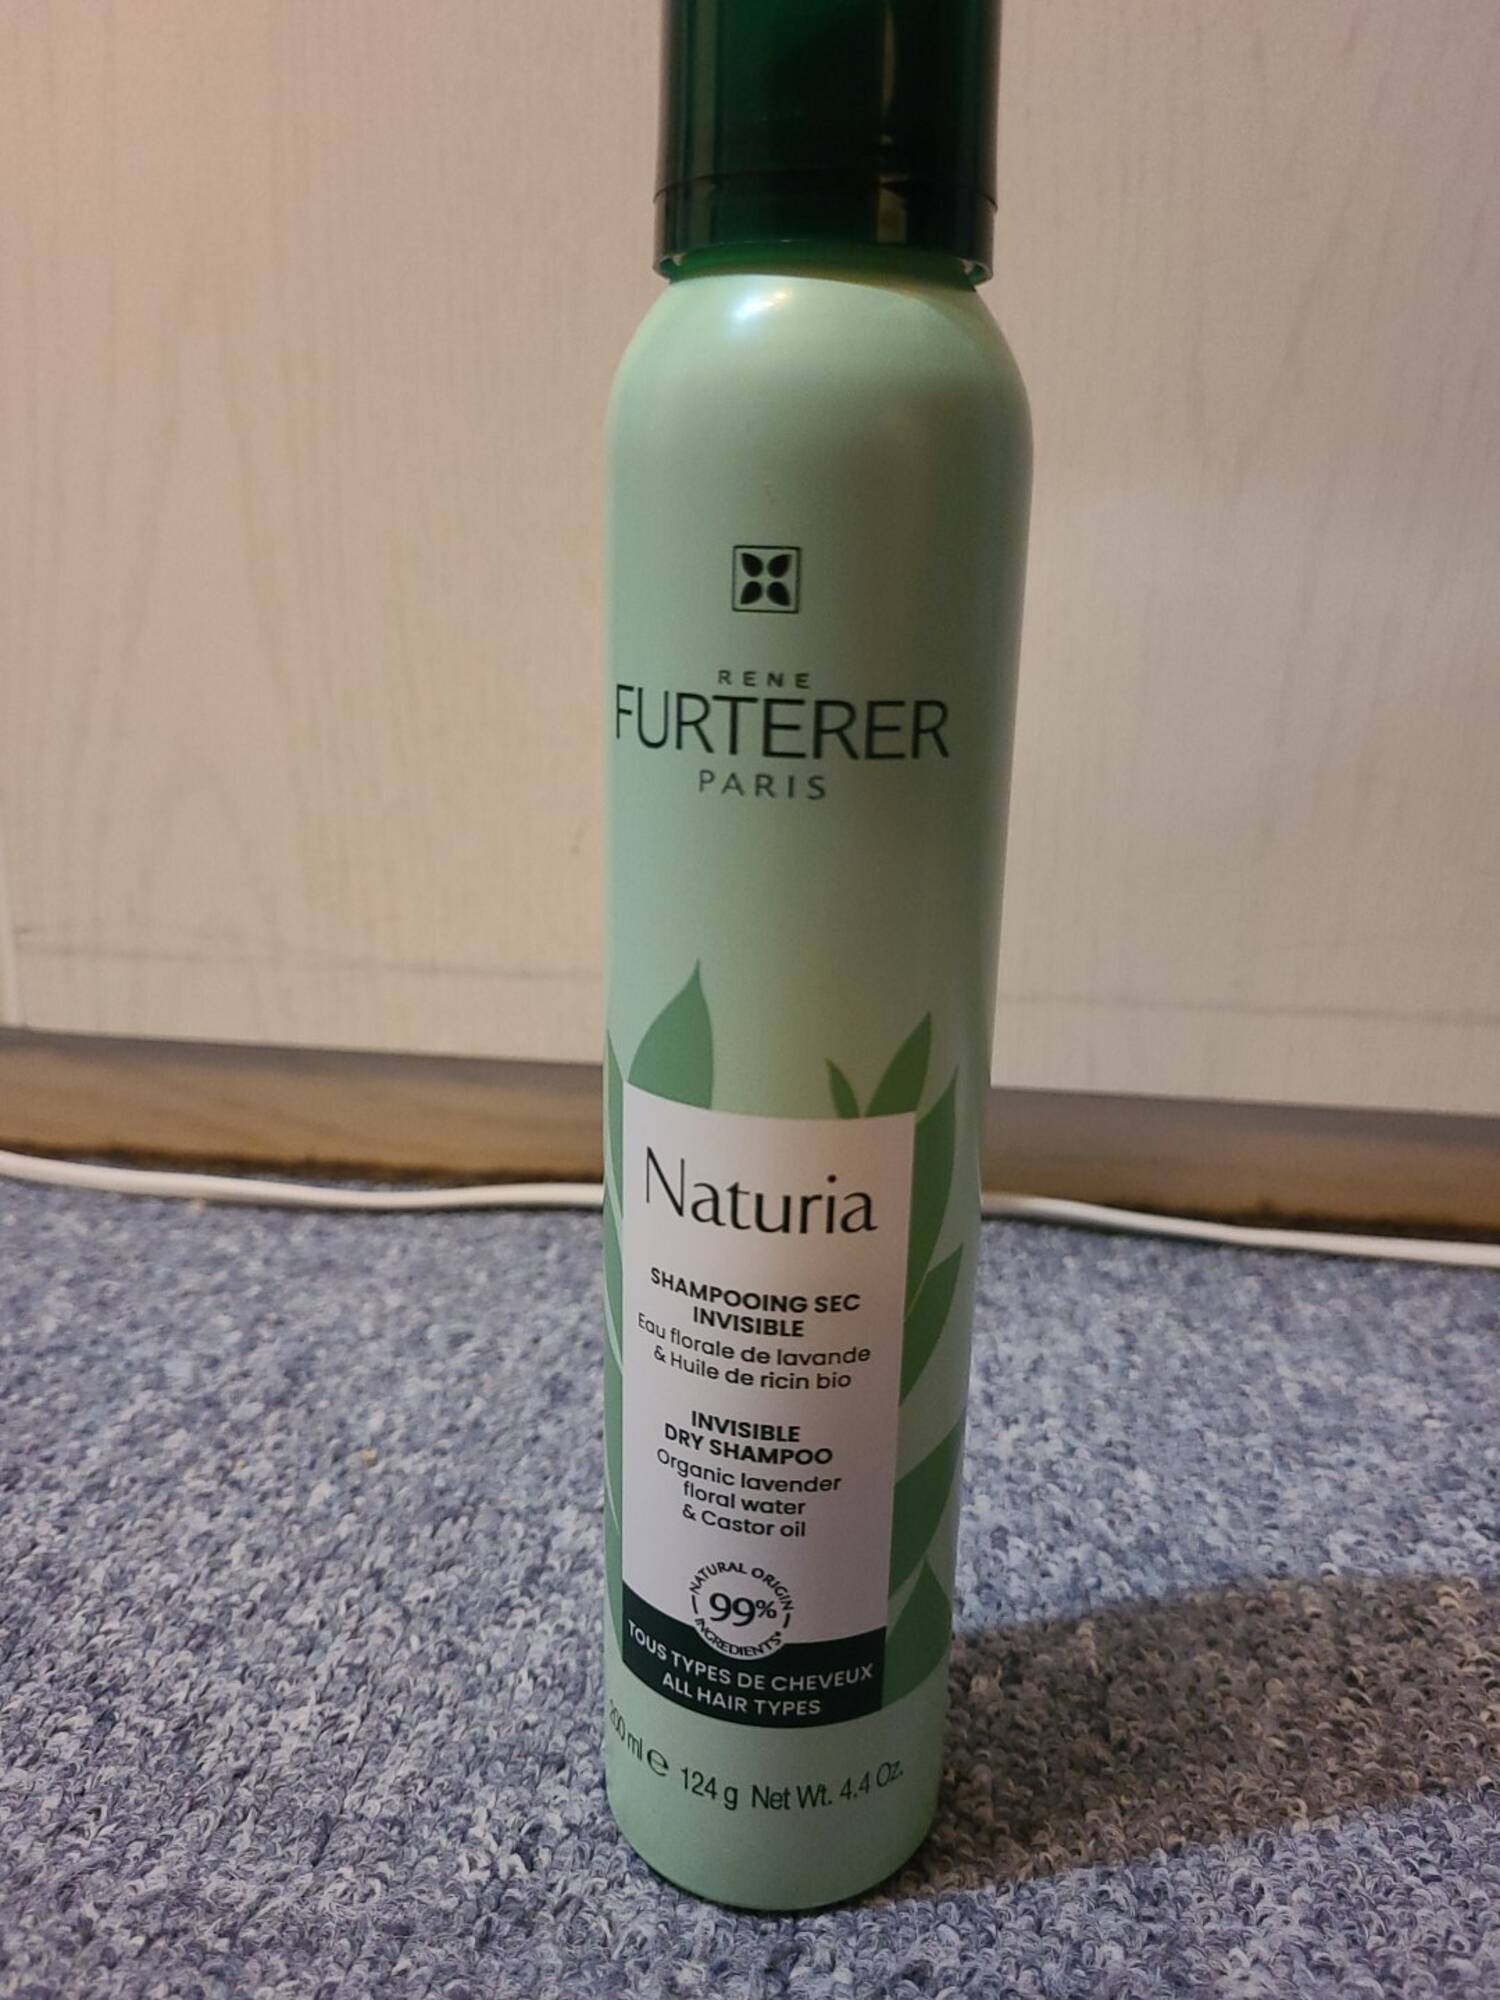 RENÉ FURTERER - Naturia - Shampooing sec invisible 